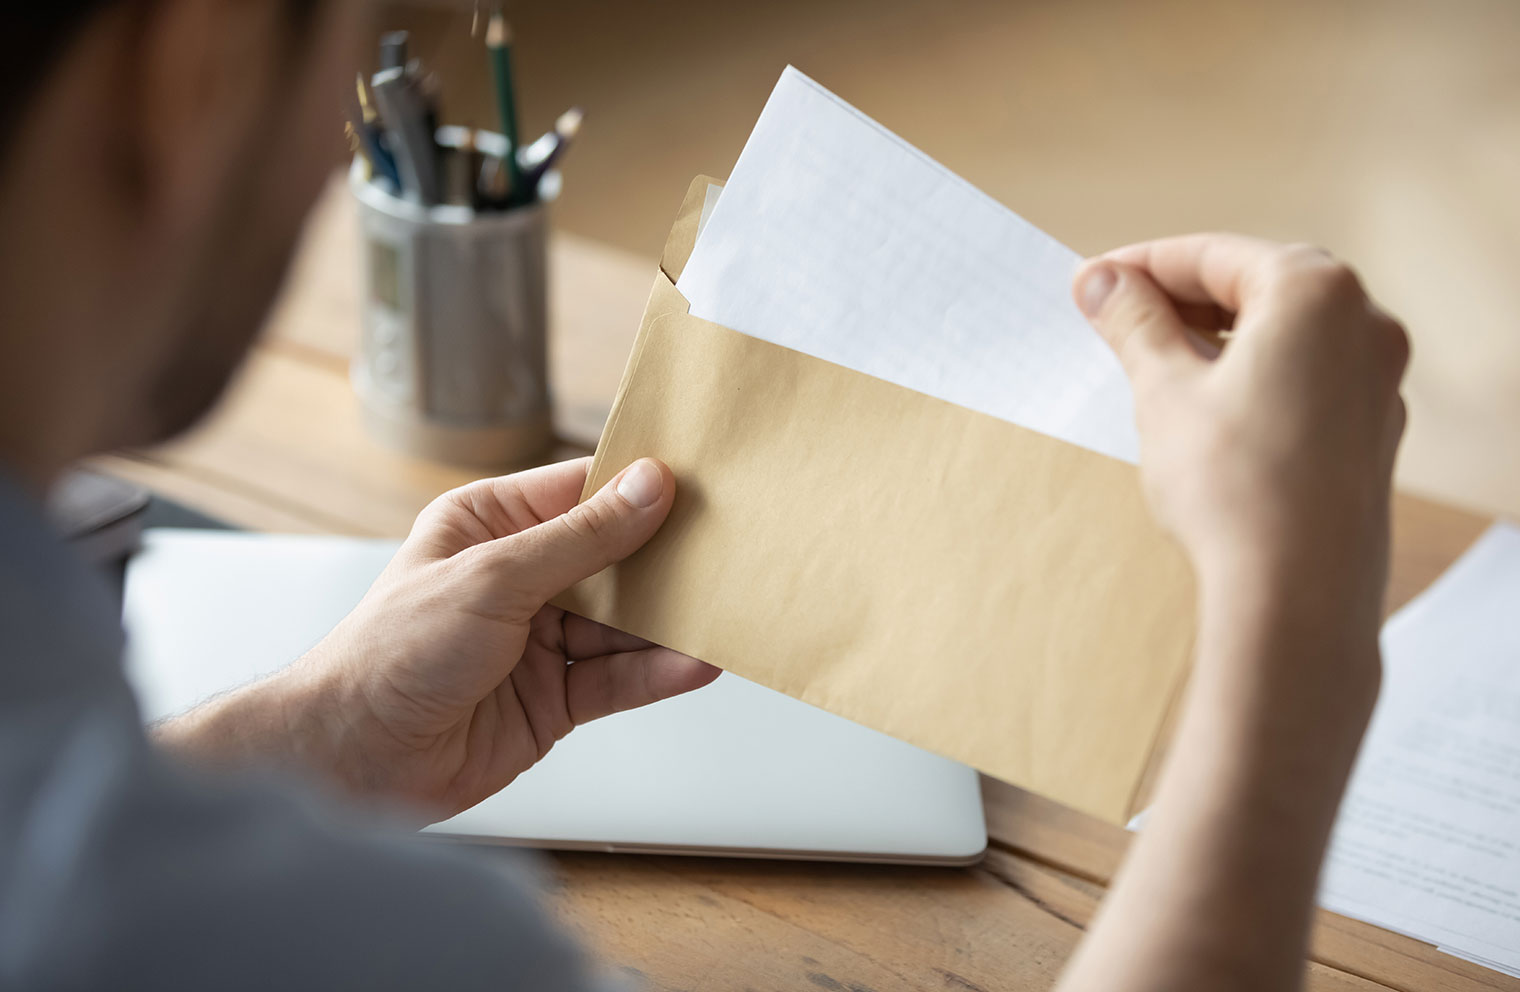 Image of man opening an envelope at desk.